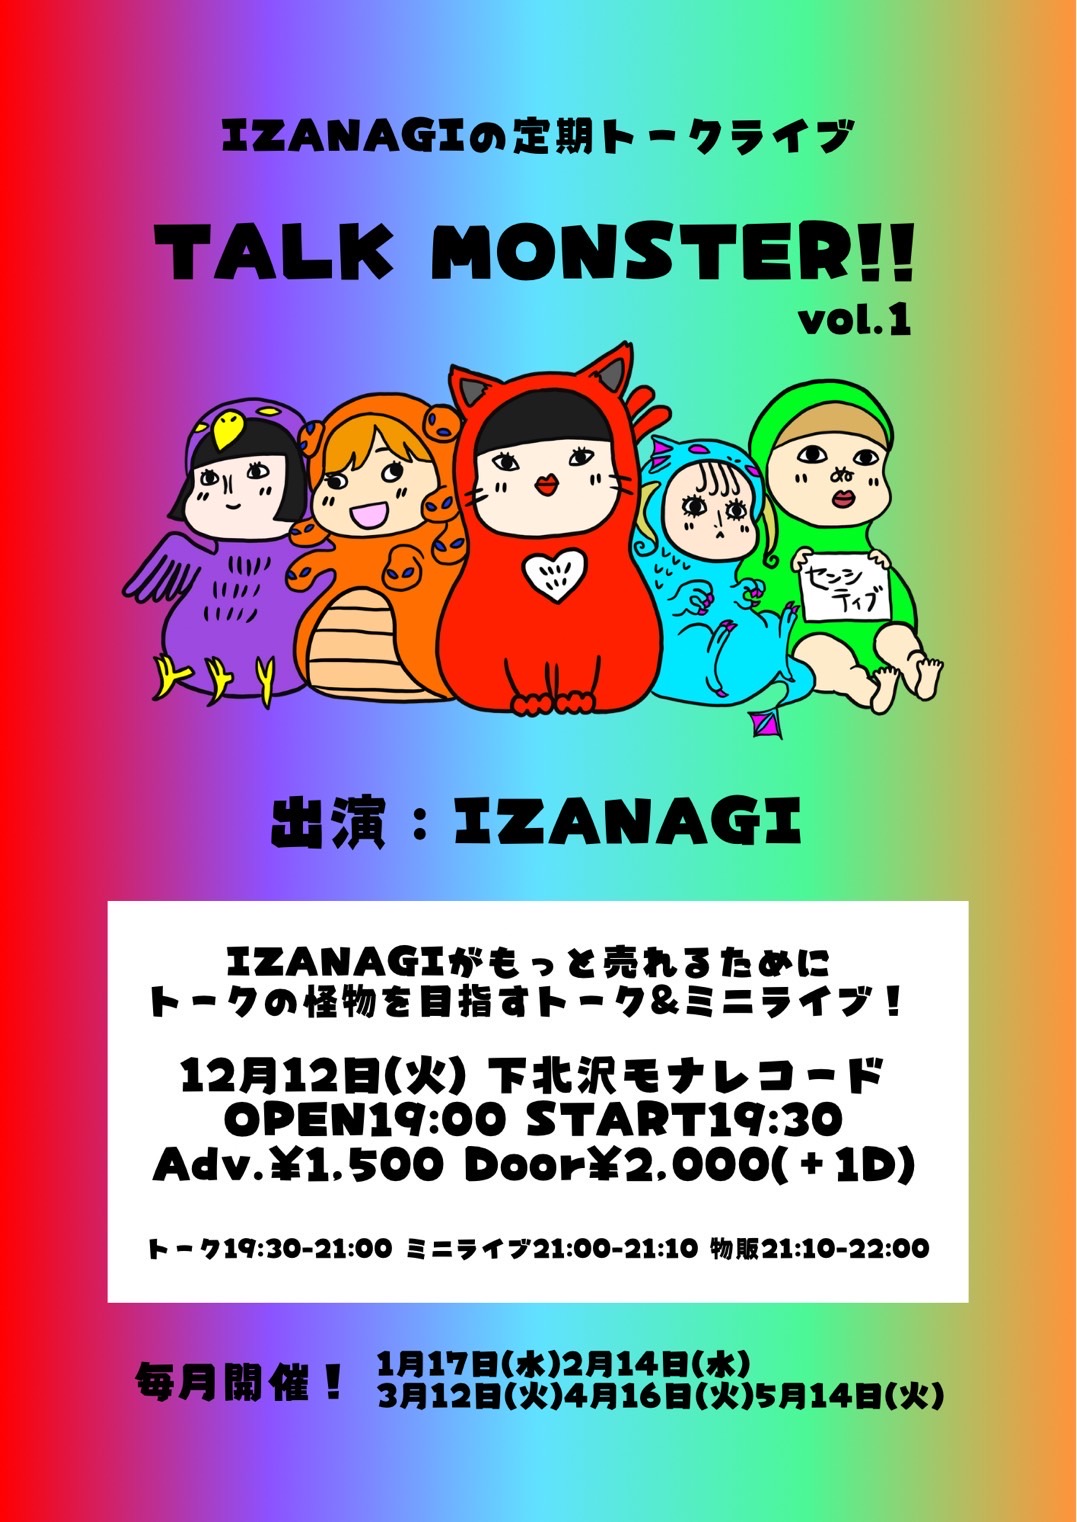 IZANAGI定期トークライブ 「TALK MONSTER!! vol.1」